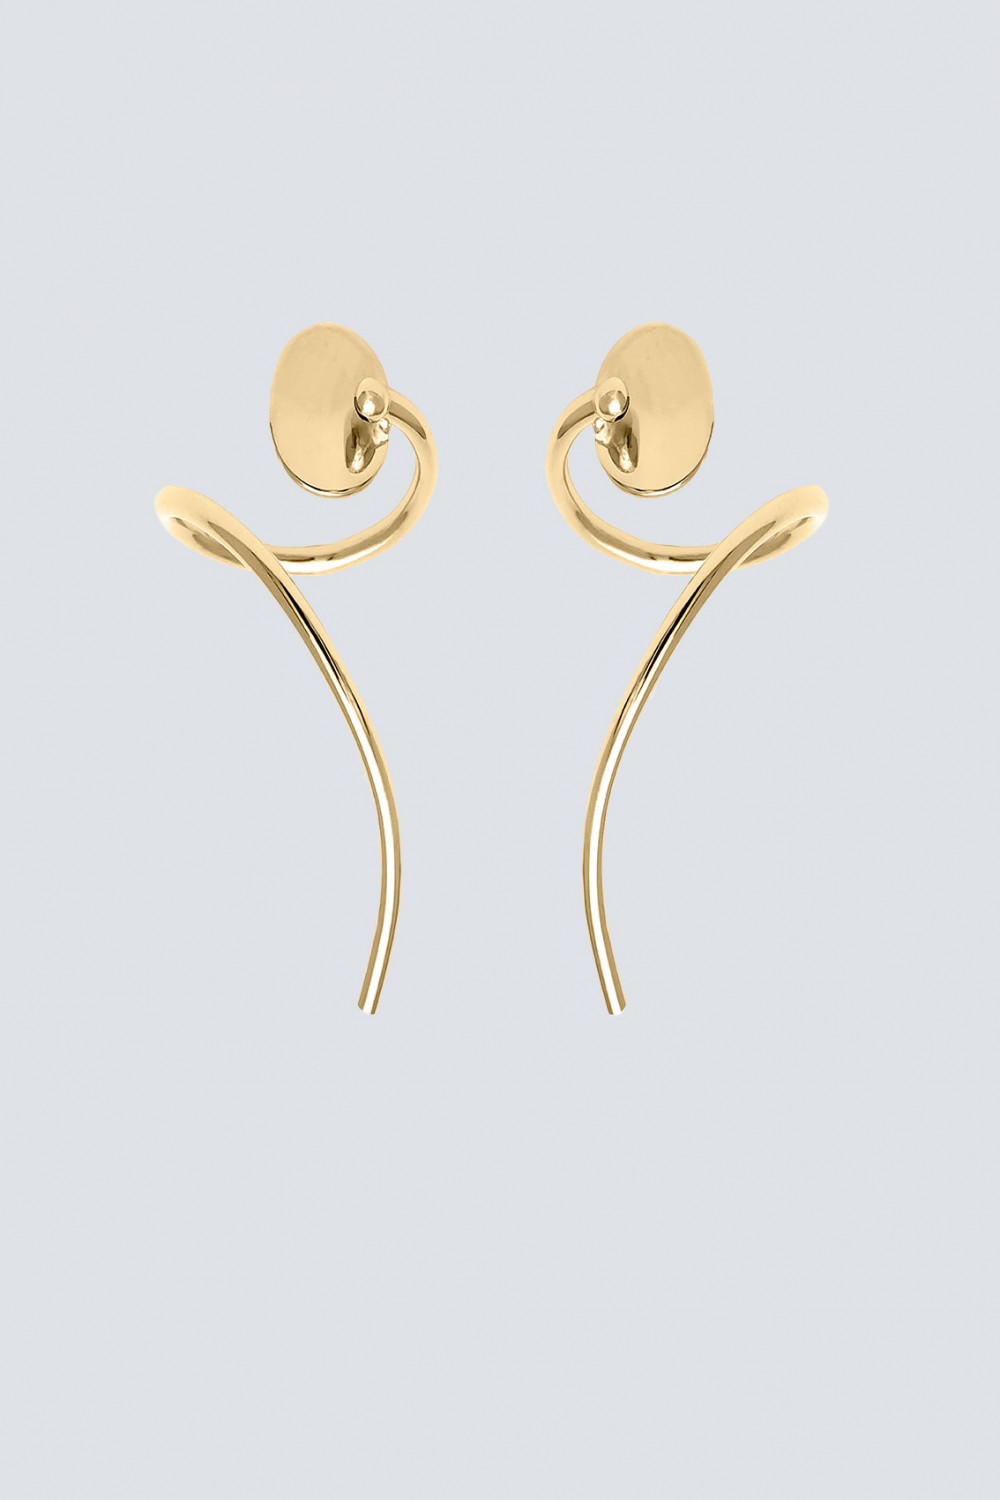 Small gold geometric earrings